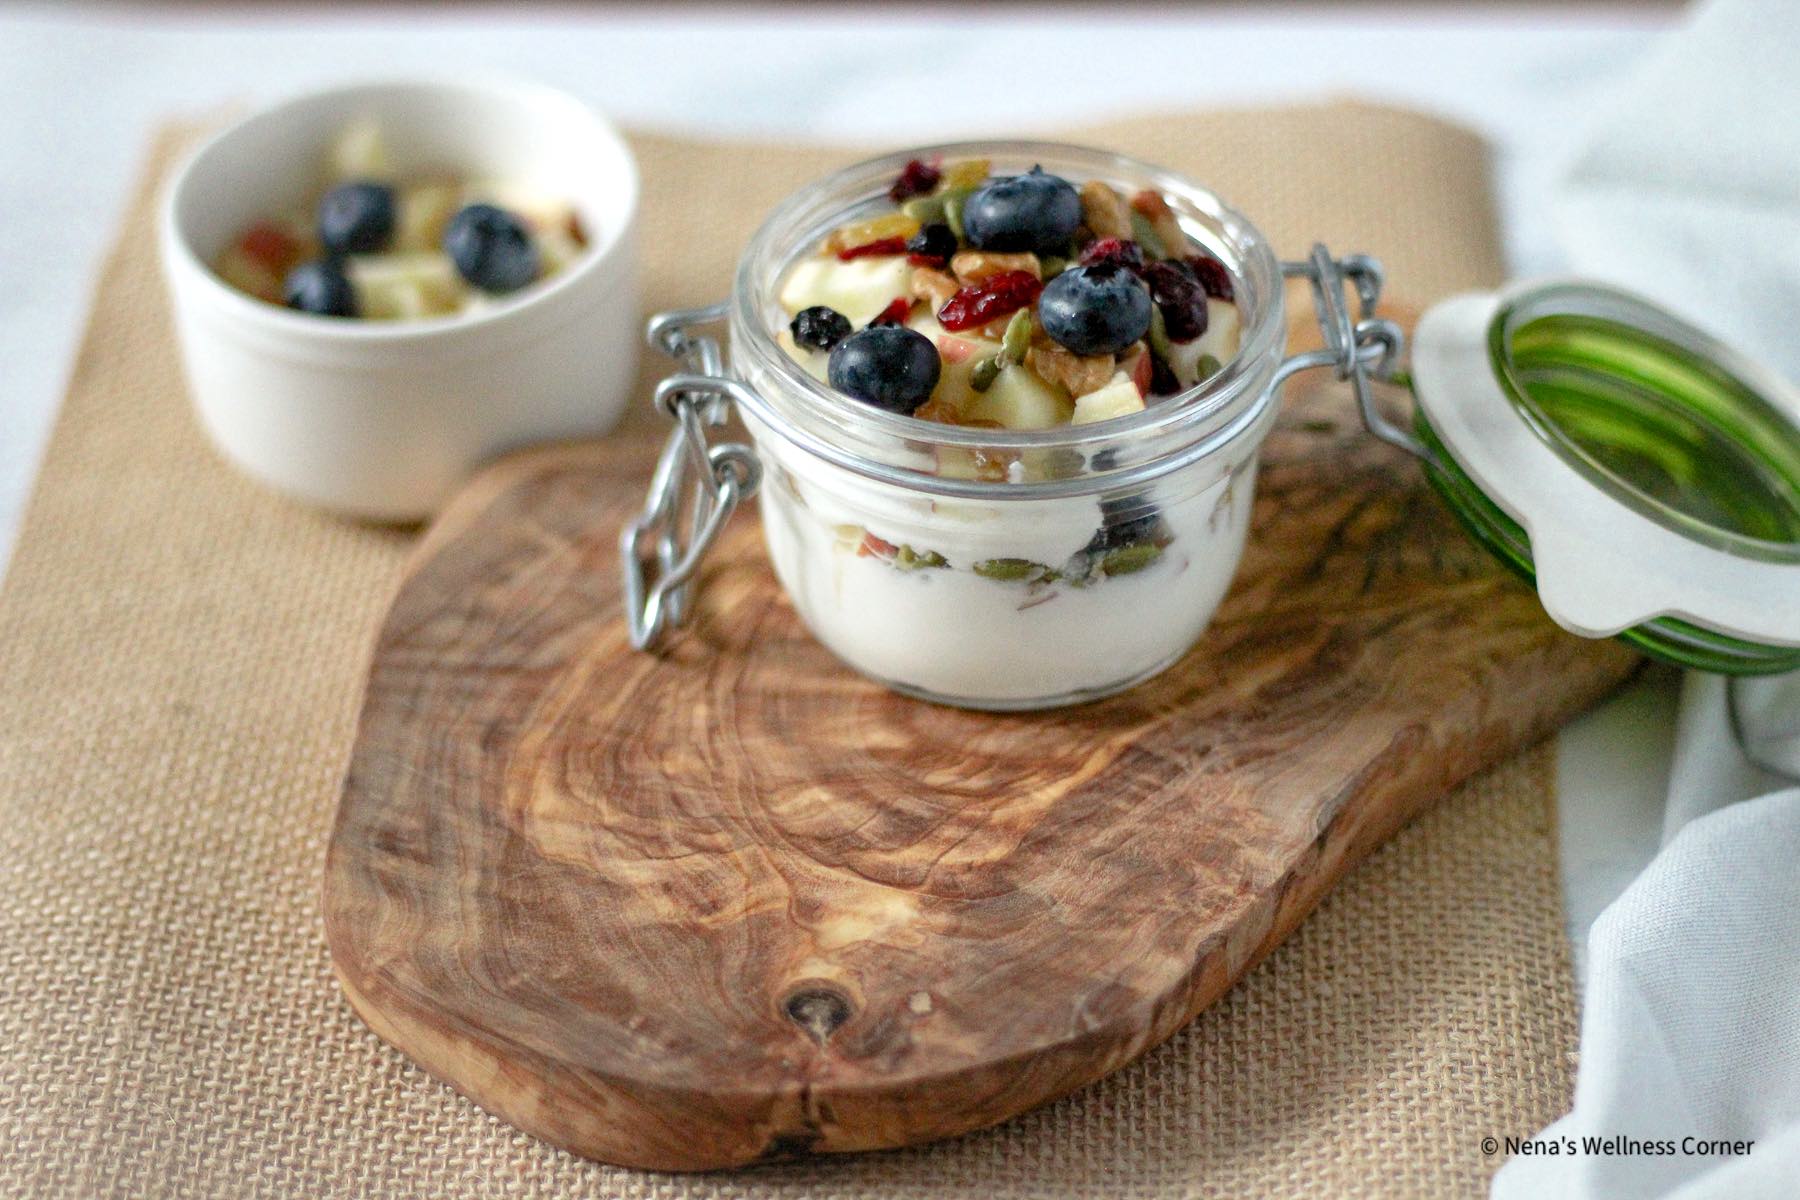 Fruit & Yogurt Meal Prep Breakfast Idea - Passion For Savings